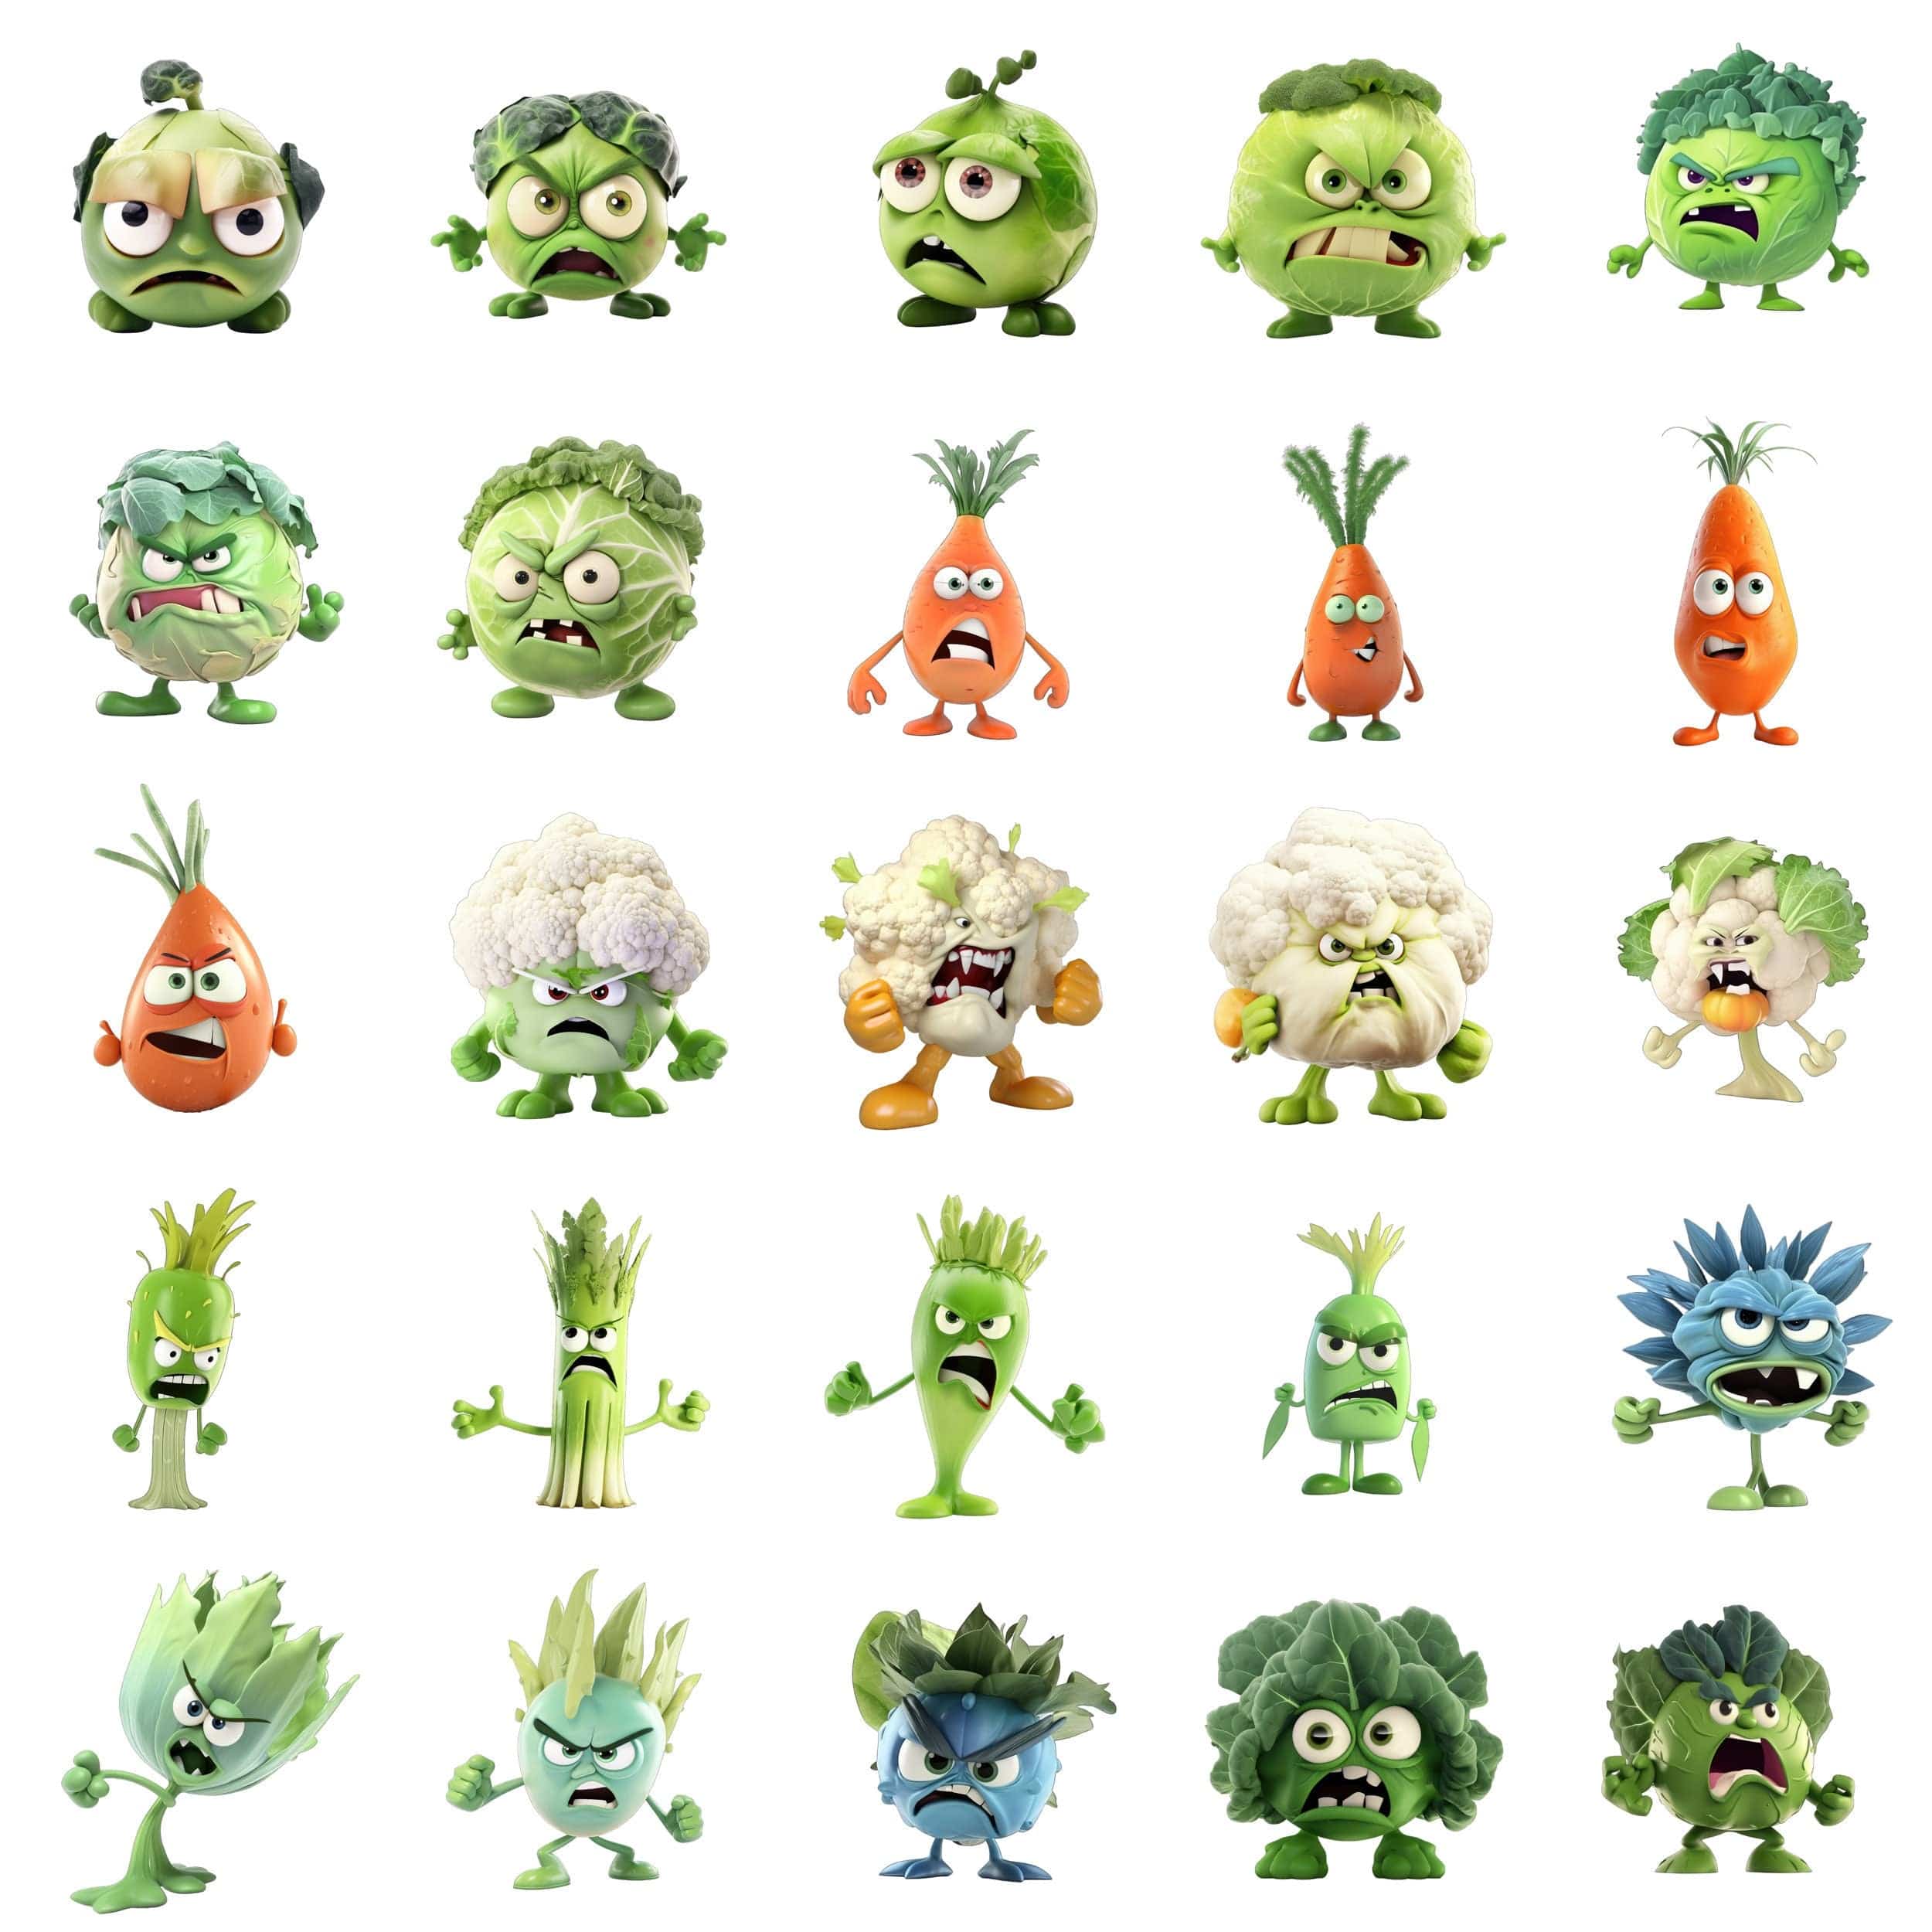 180 Angry Vegetable Transparent Images Bundle - Digital Download - High Resolution - Clipart - Instant Download - Funny vegetables Digital Download Sumobundle